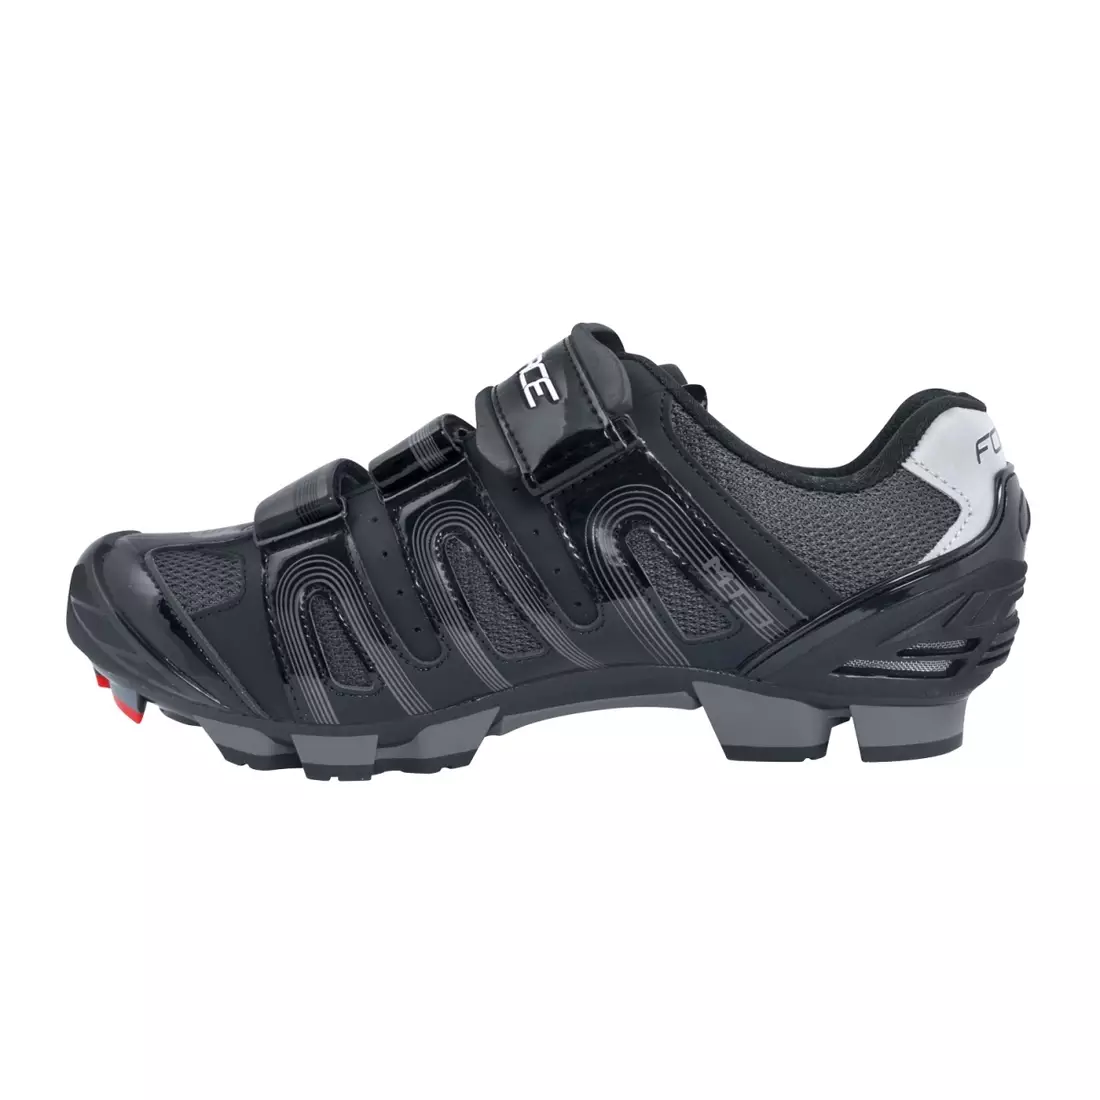 FORCE MTB HARD cycling shoes 94063 black